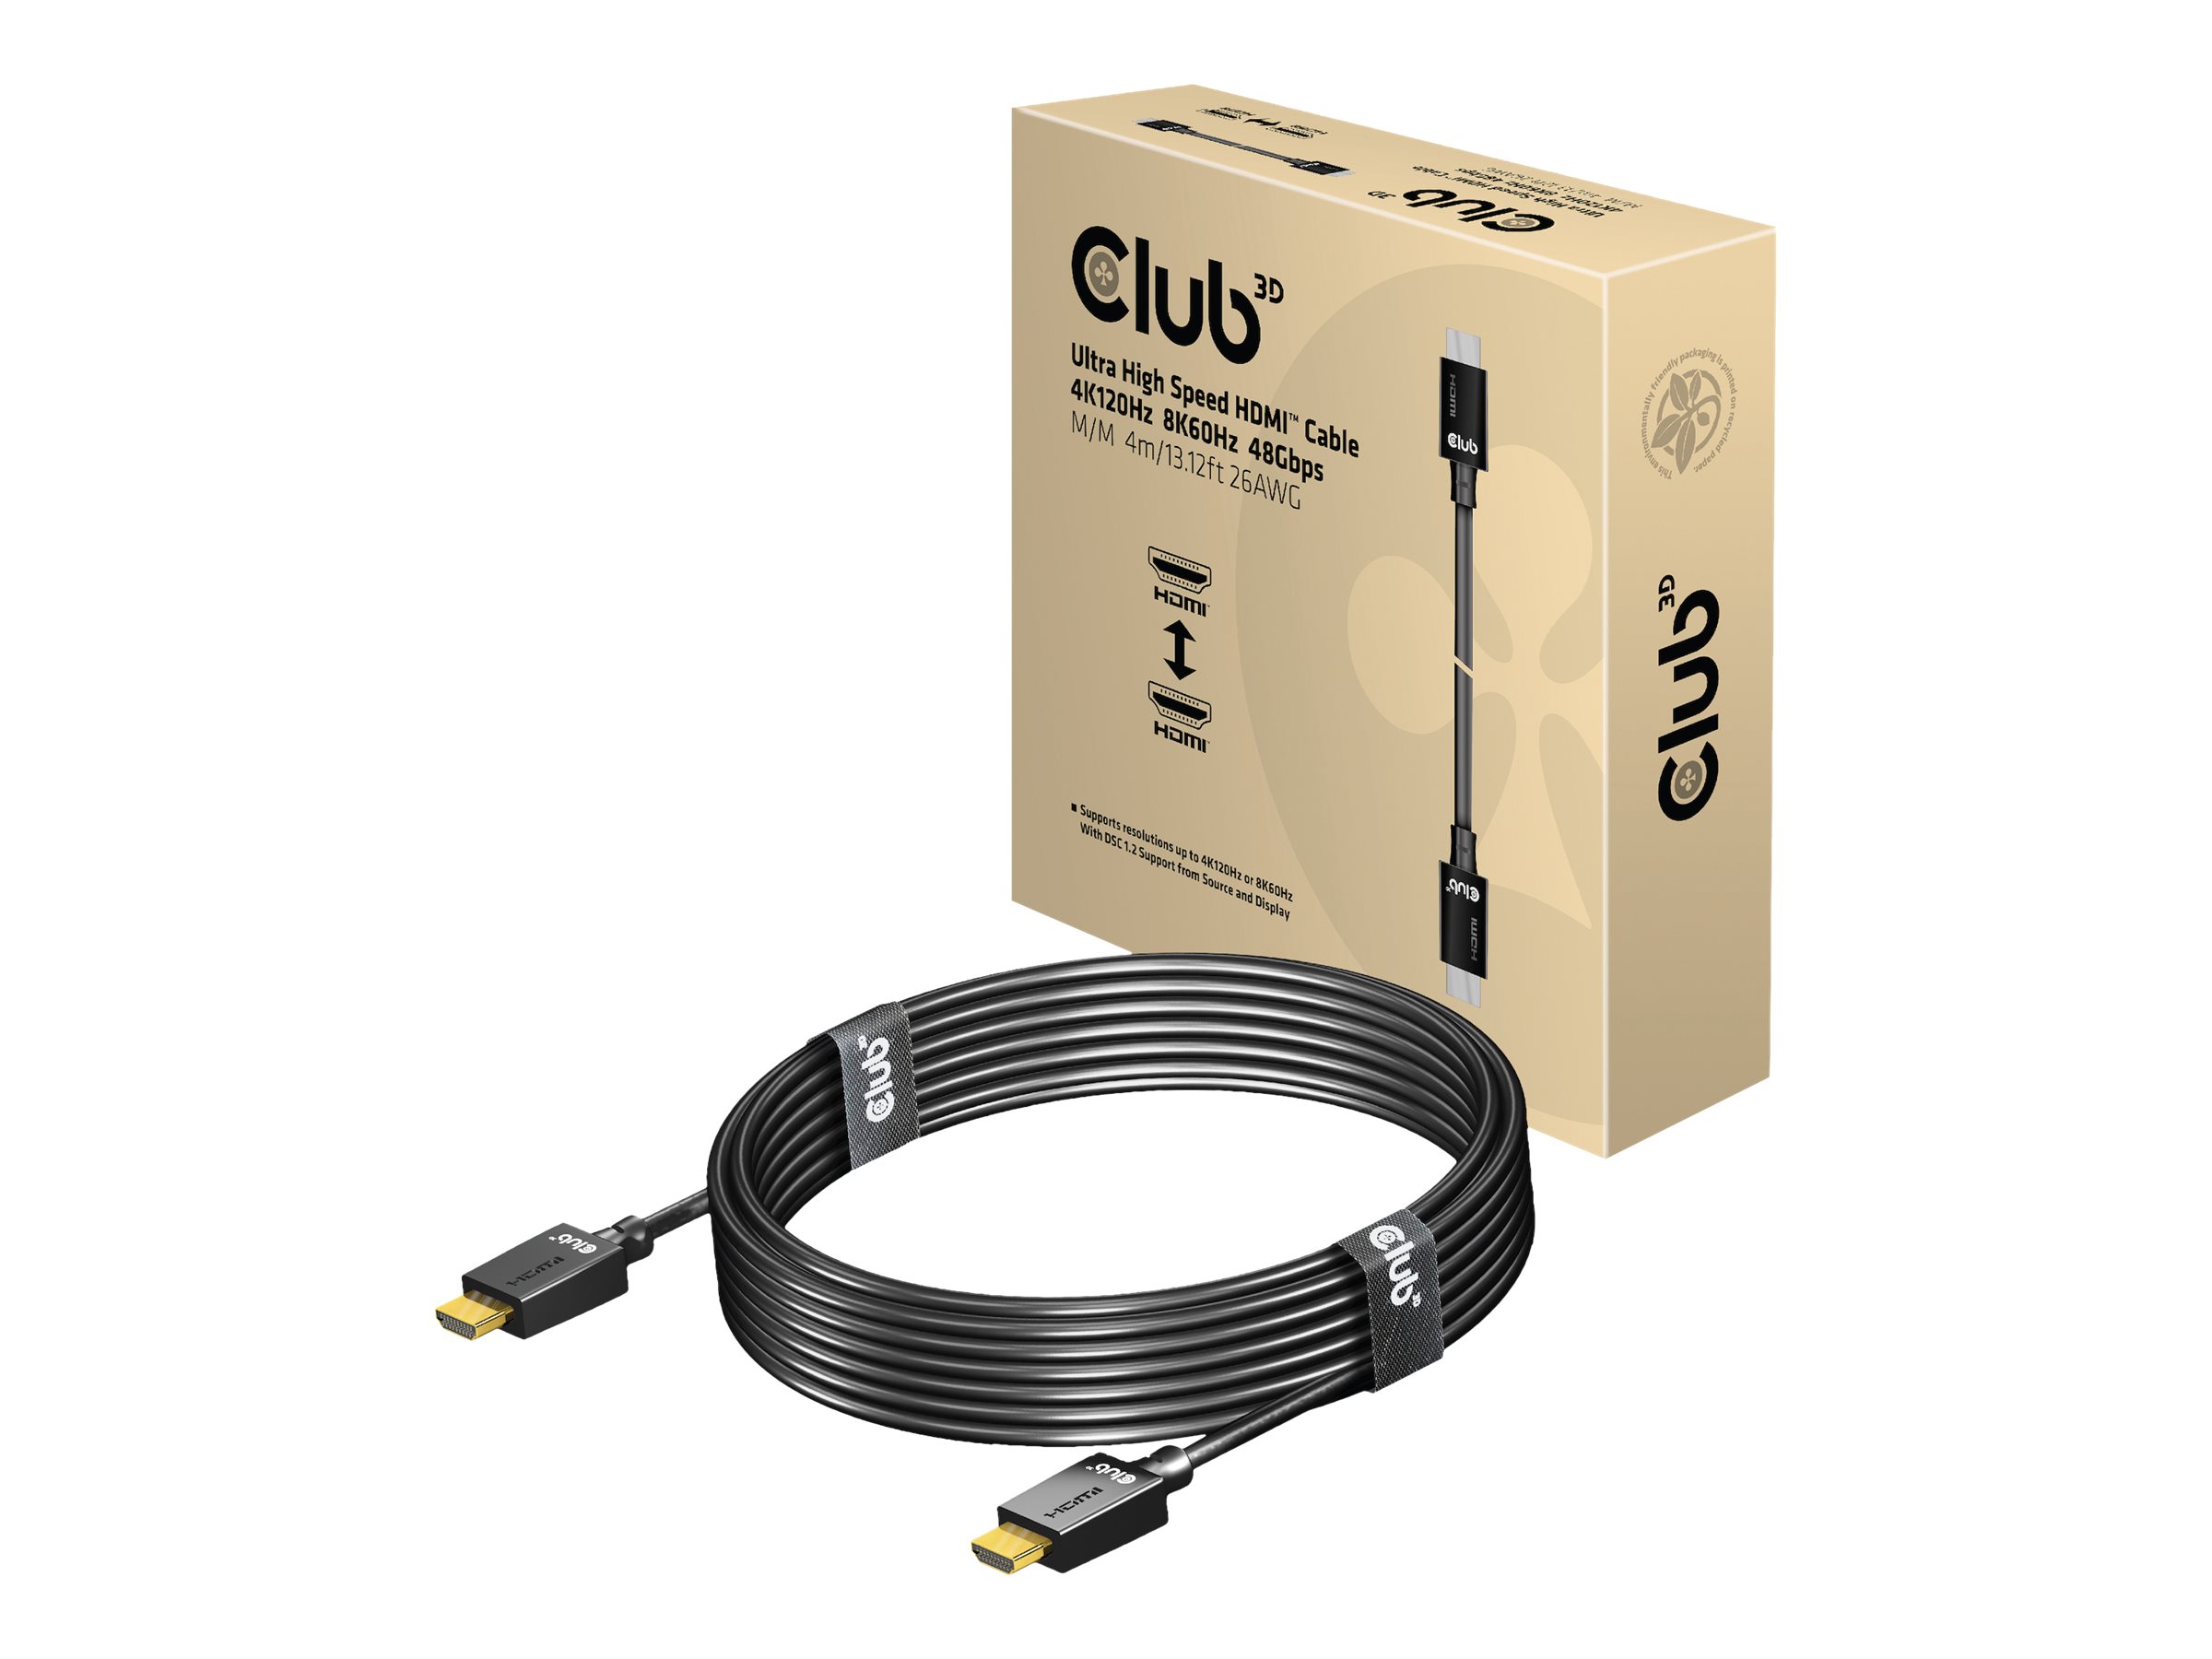 Club 3D Ultra High Speed HDMI-Kabel - 4m